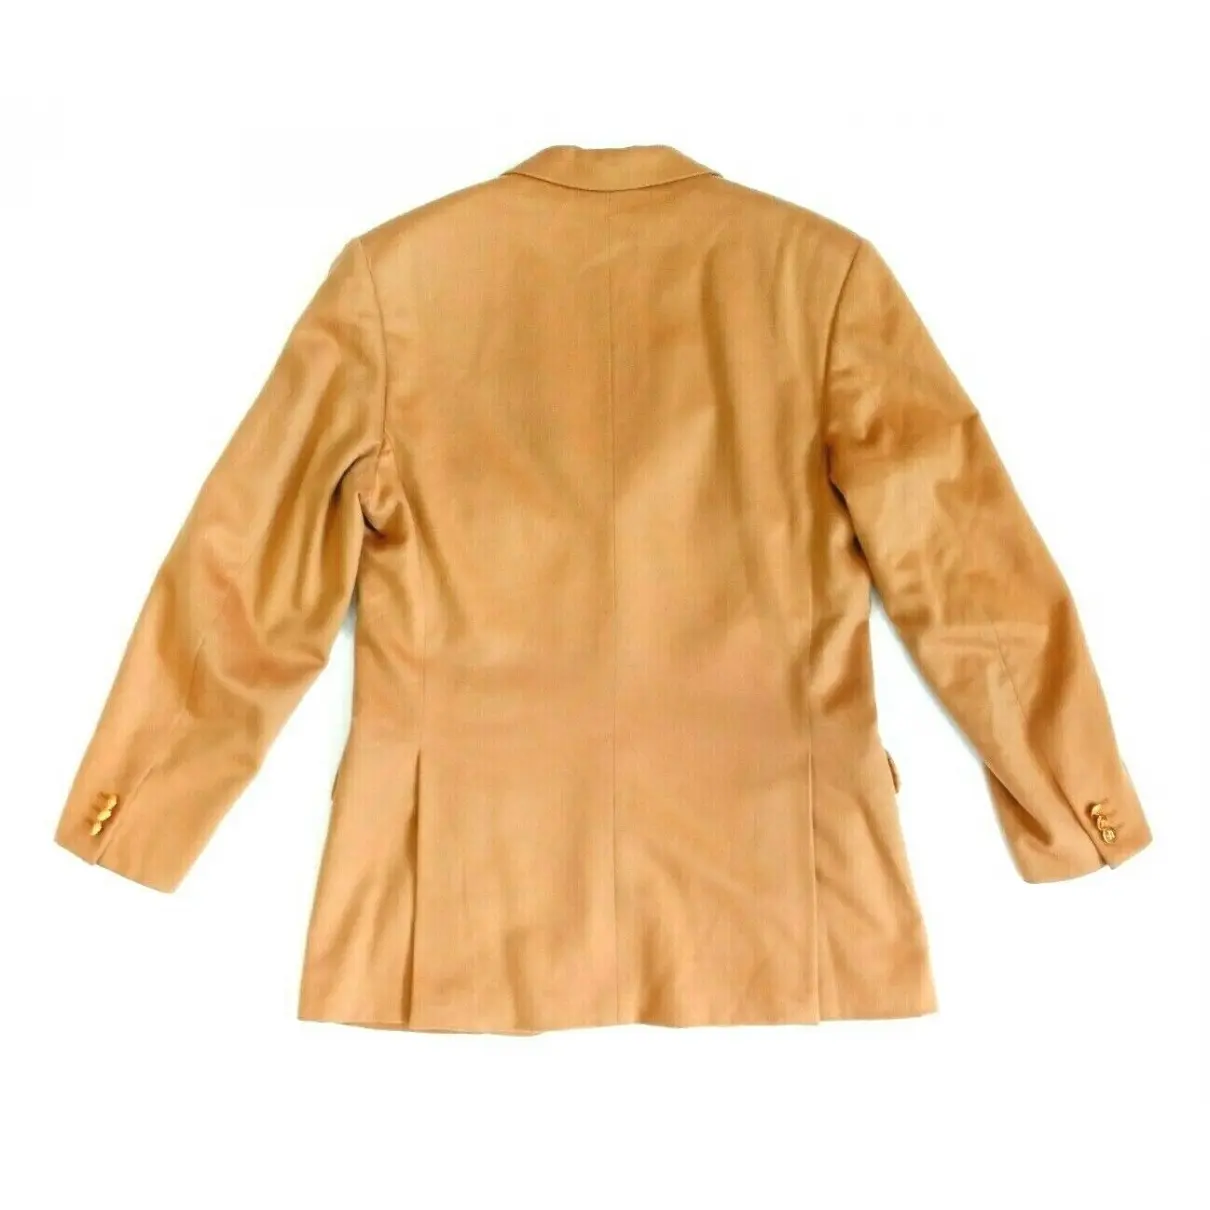 Ballantyne Wool jacket for sale - Vintage